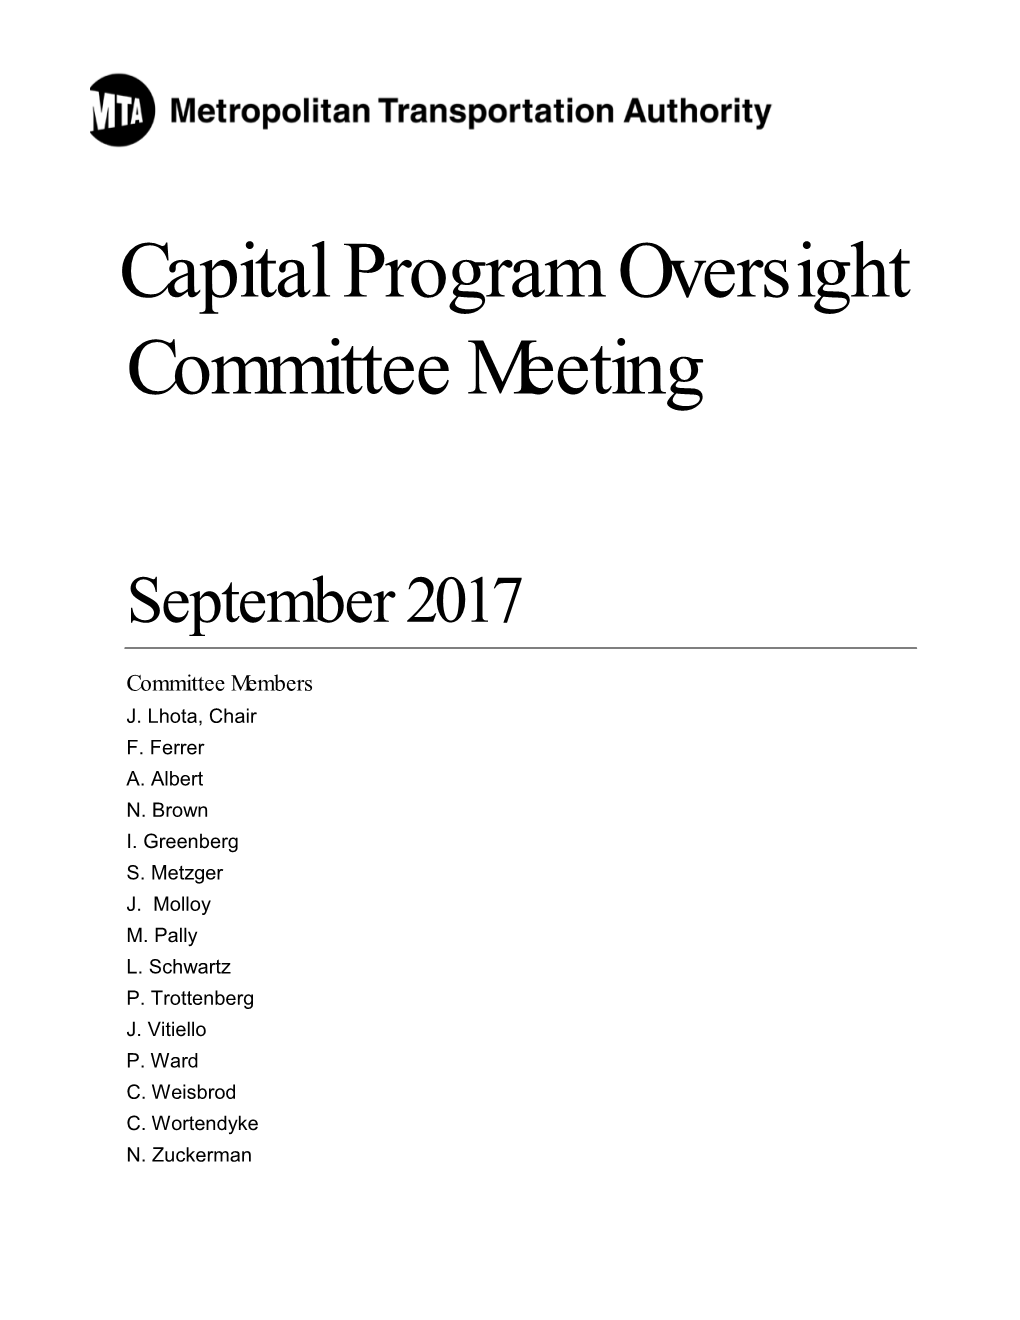 Capital Program Oversight Committee Meeting